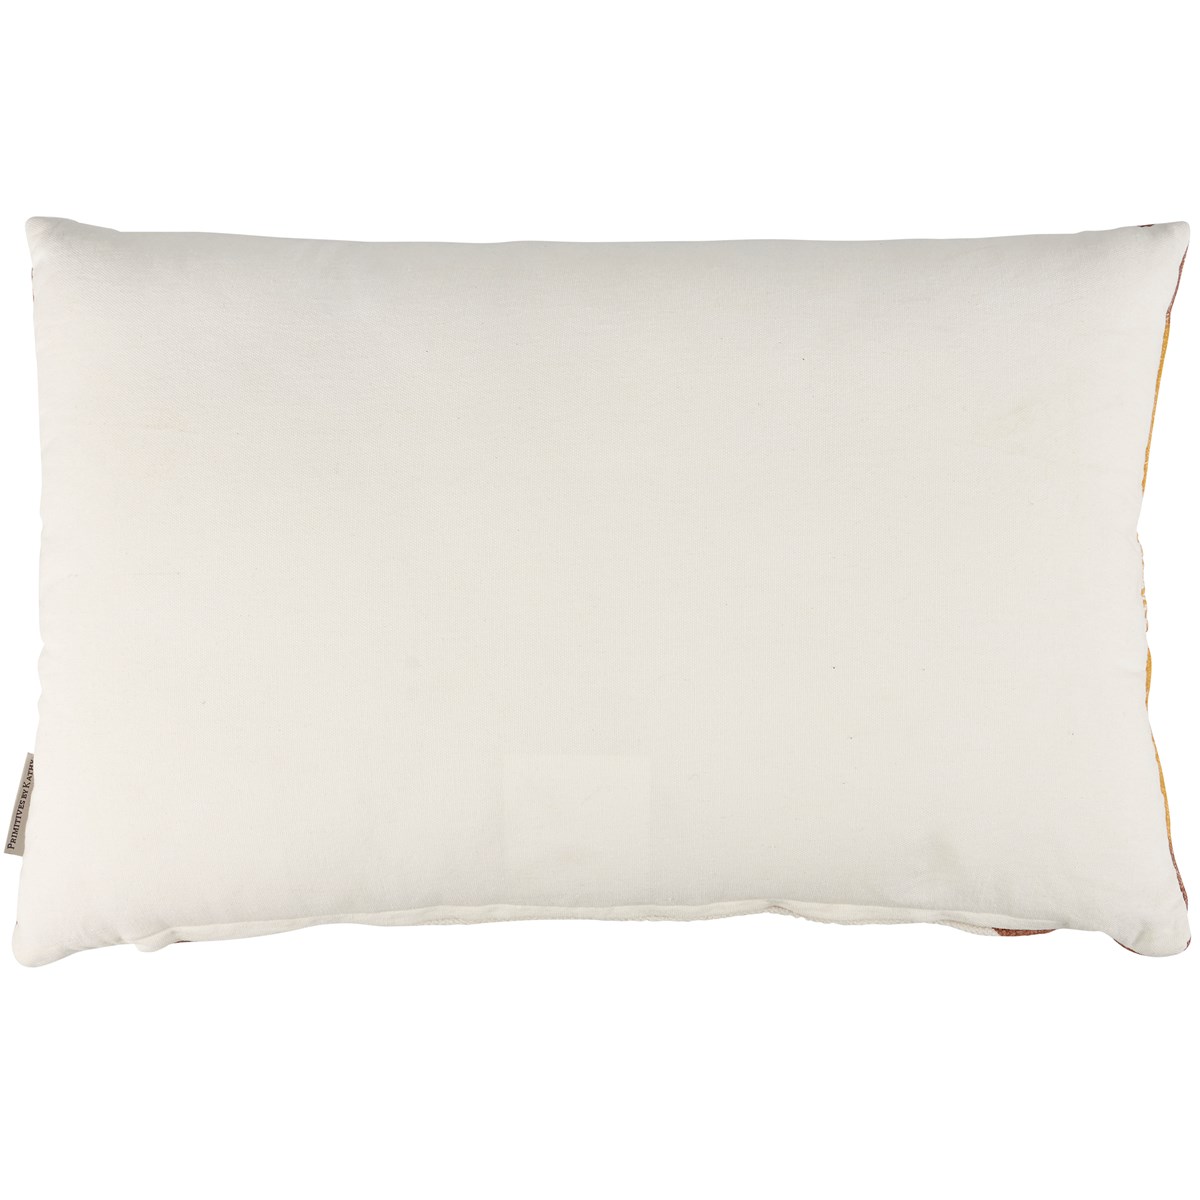 Southwestern  Pillow - Cotton, Zipper